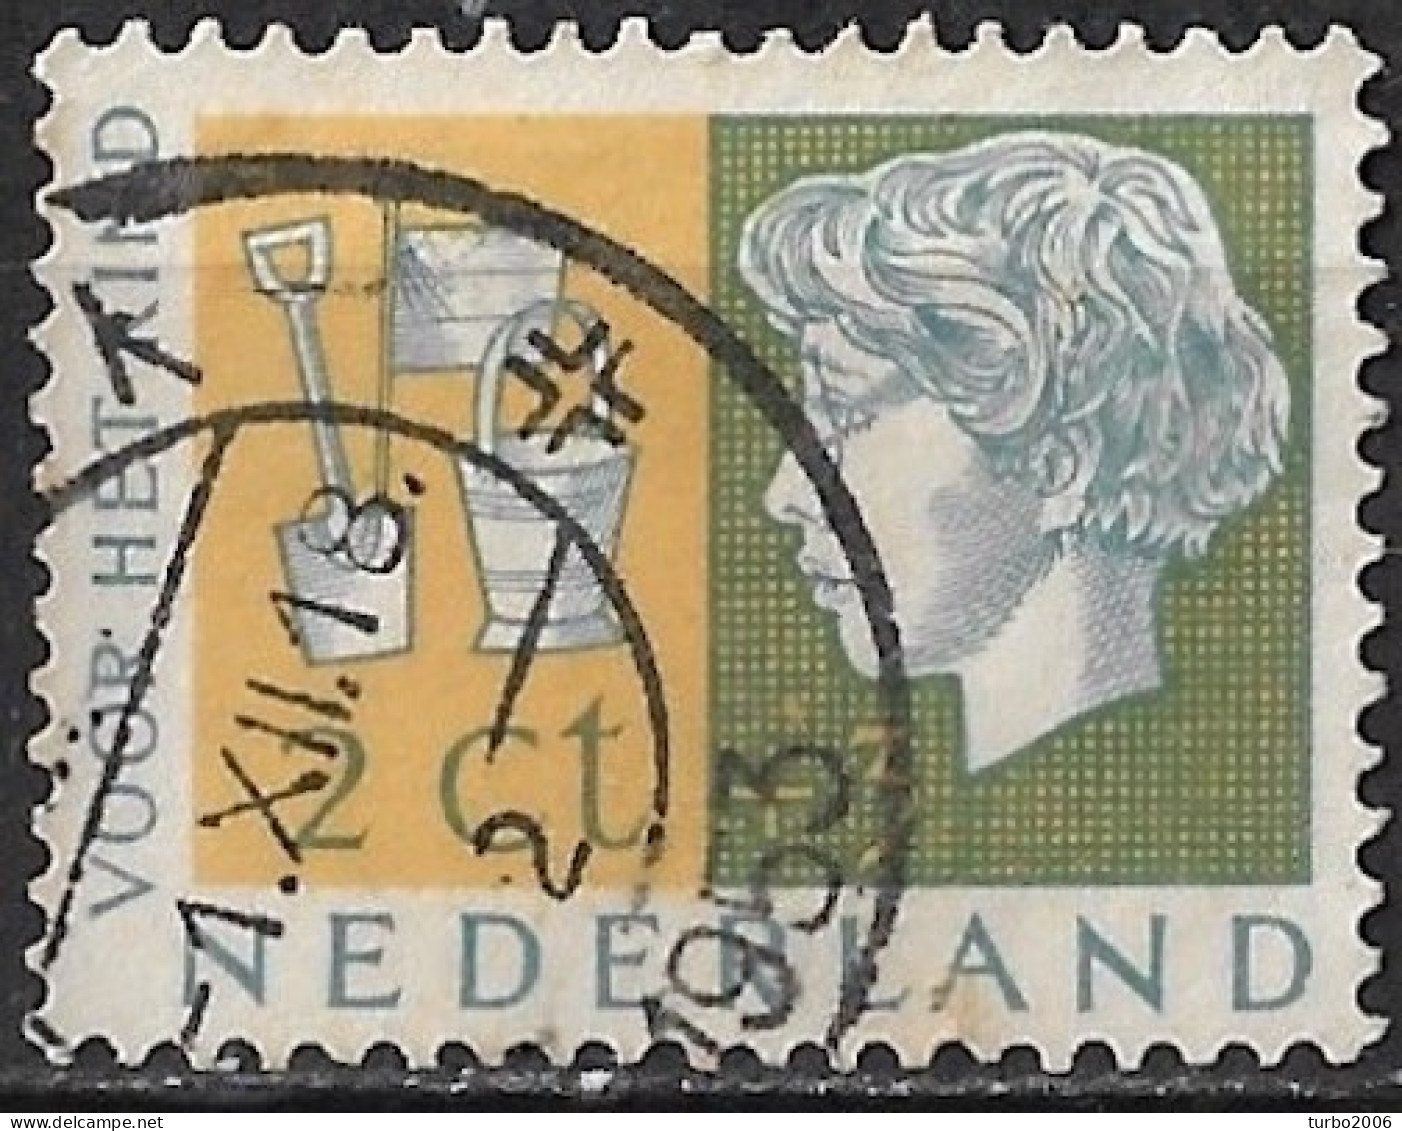 Afwijking Gele Vlek In Achtergrond Portret In 1953 Kinderzegel 2 + 3 Cent NVPH 612 - Plaatfouten En Curiosa